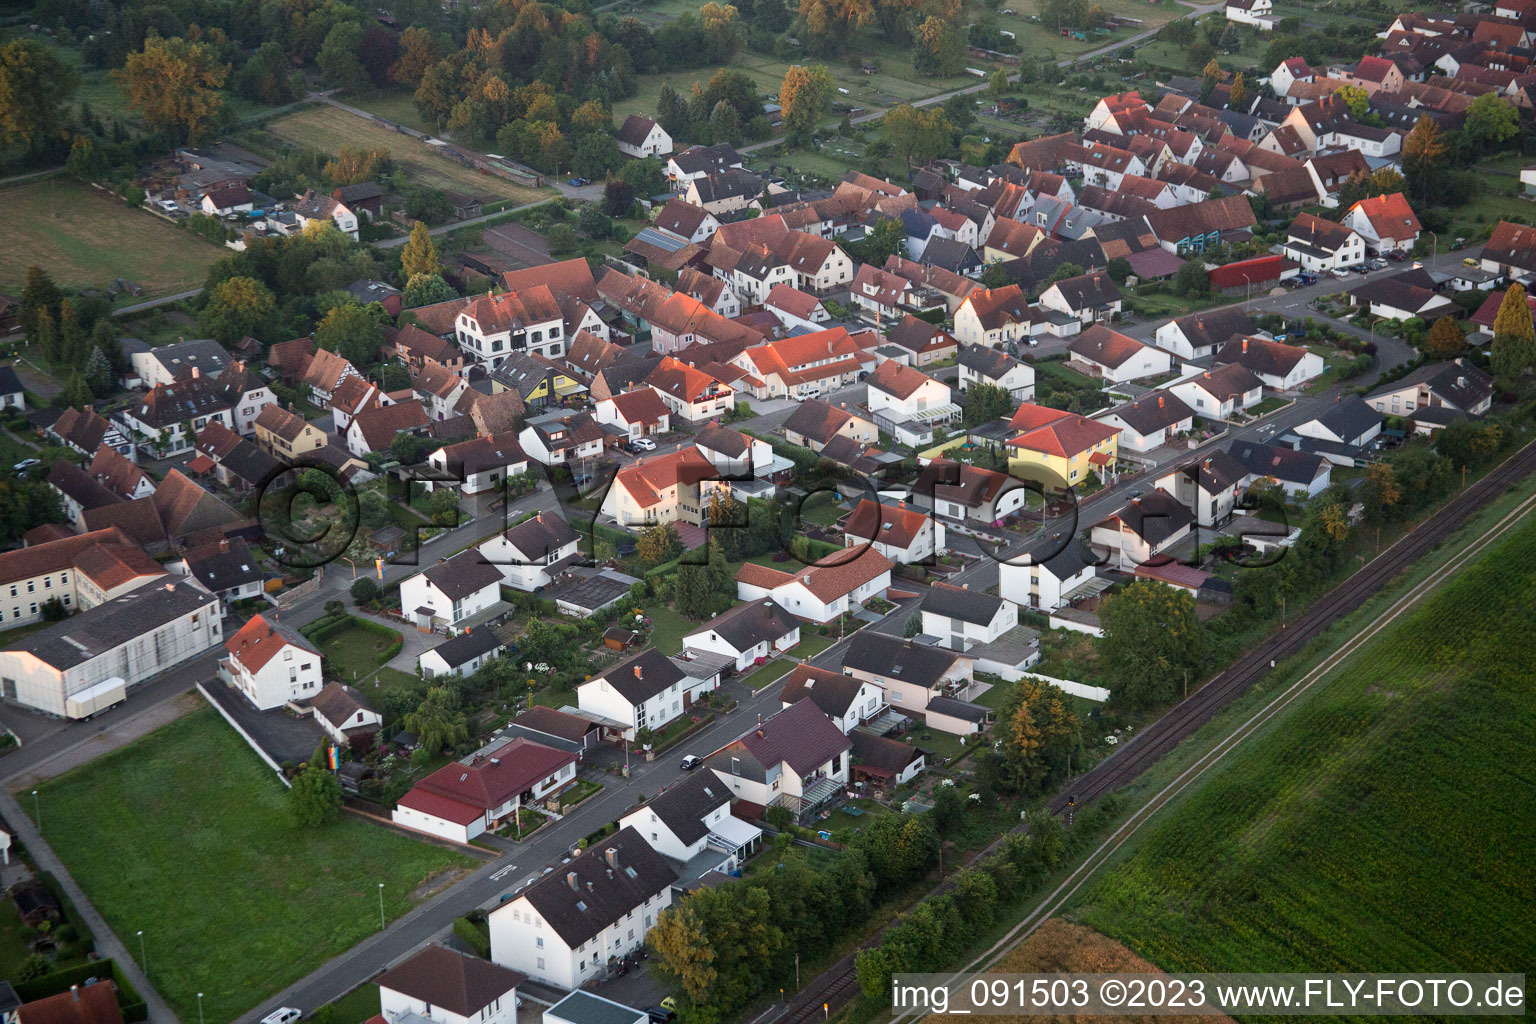 District Schaidt in Wörth am Rhein in the state Rhineland-Palatinate, Germany seen from a drone